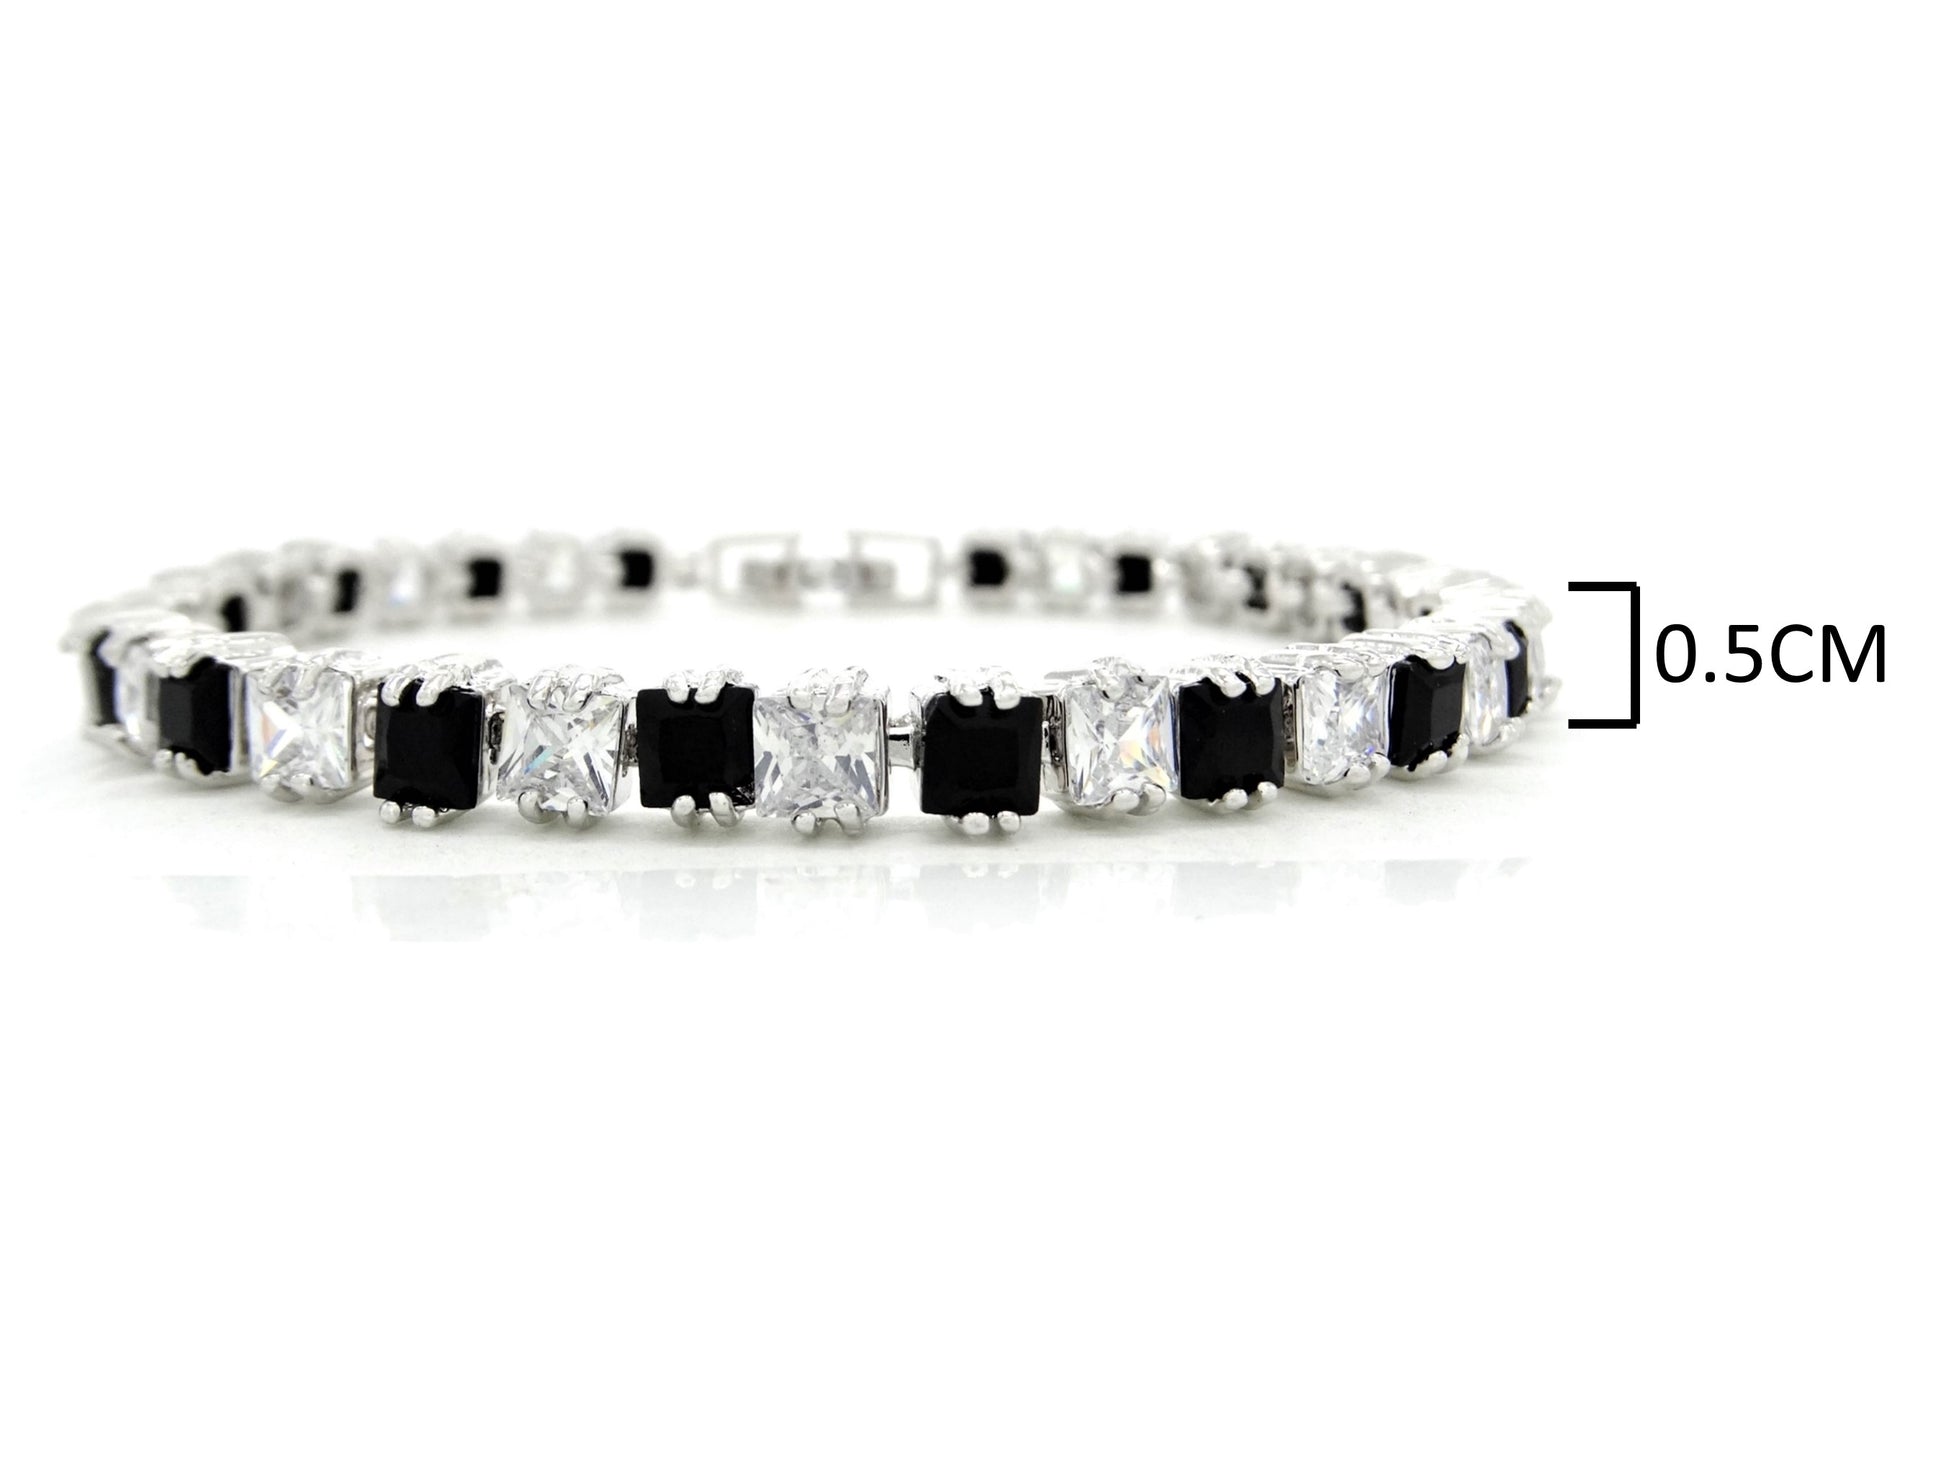 White gold princess black moonstone and clear gems bracelet MEASUREMENT